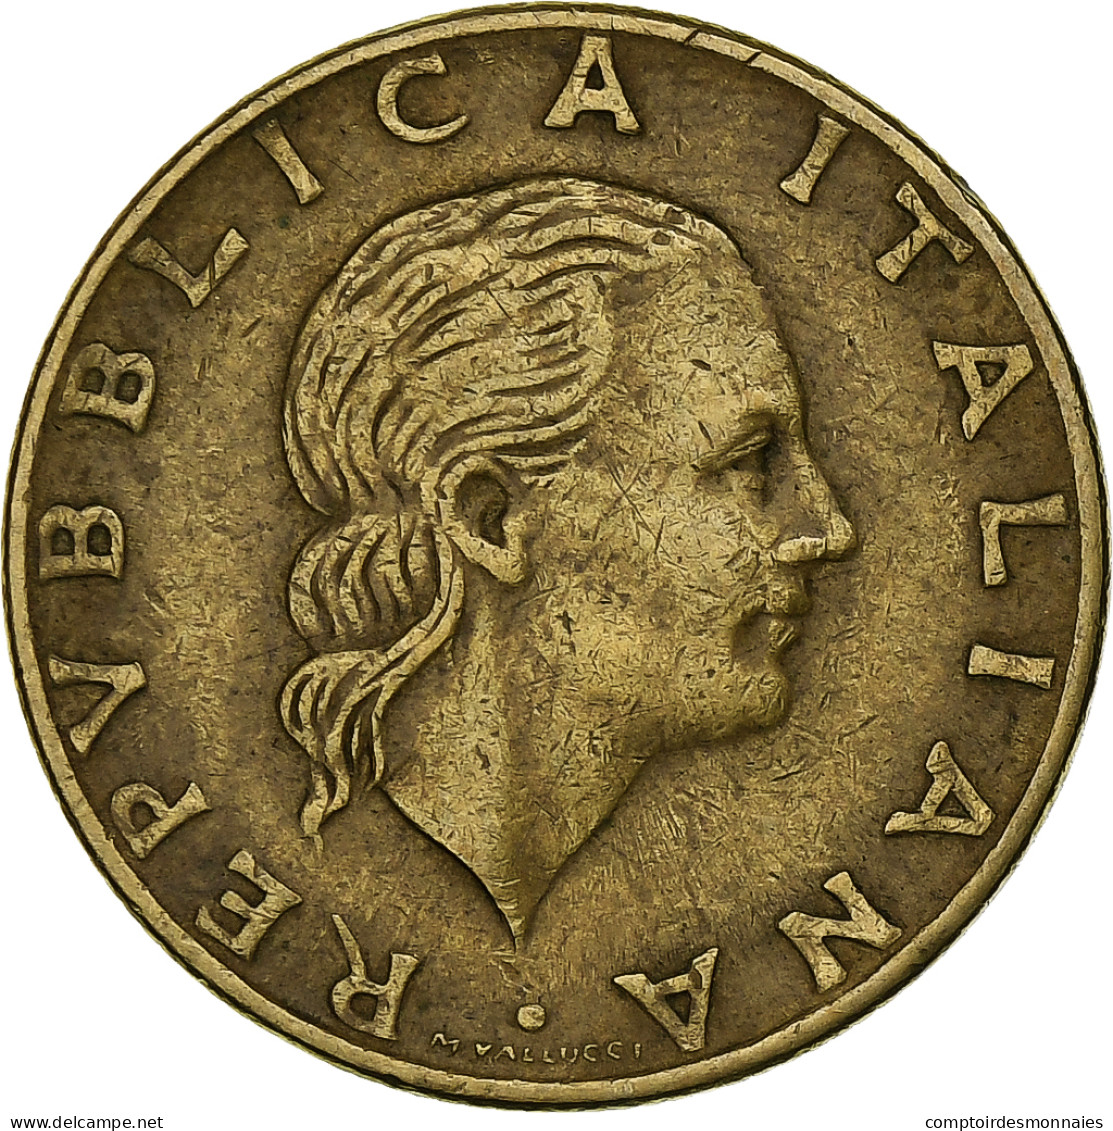 Italie, 200 Lire, 1978, Rome, TB, Bronze-Aluminium, KM:105 - 200 Lire